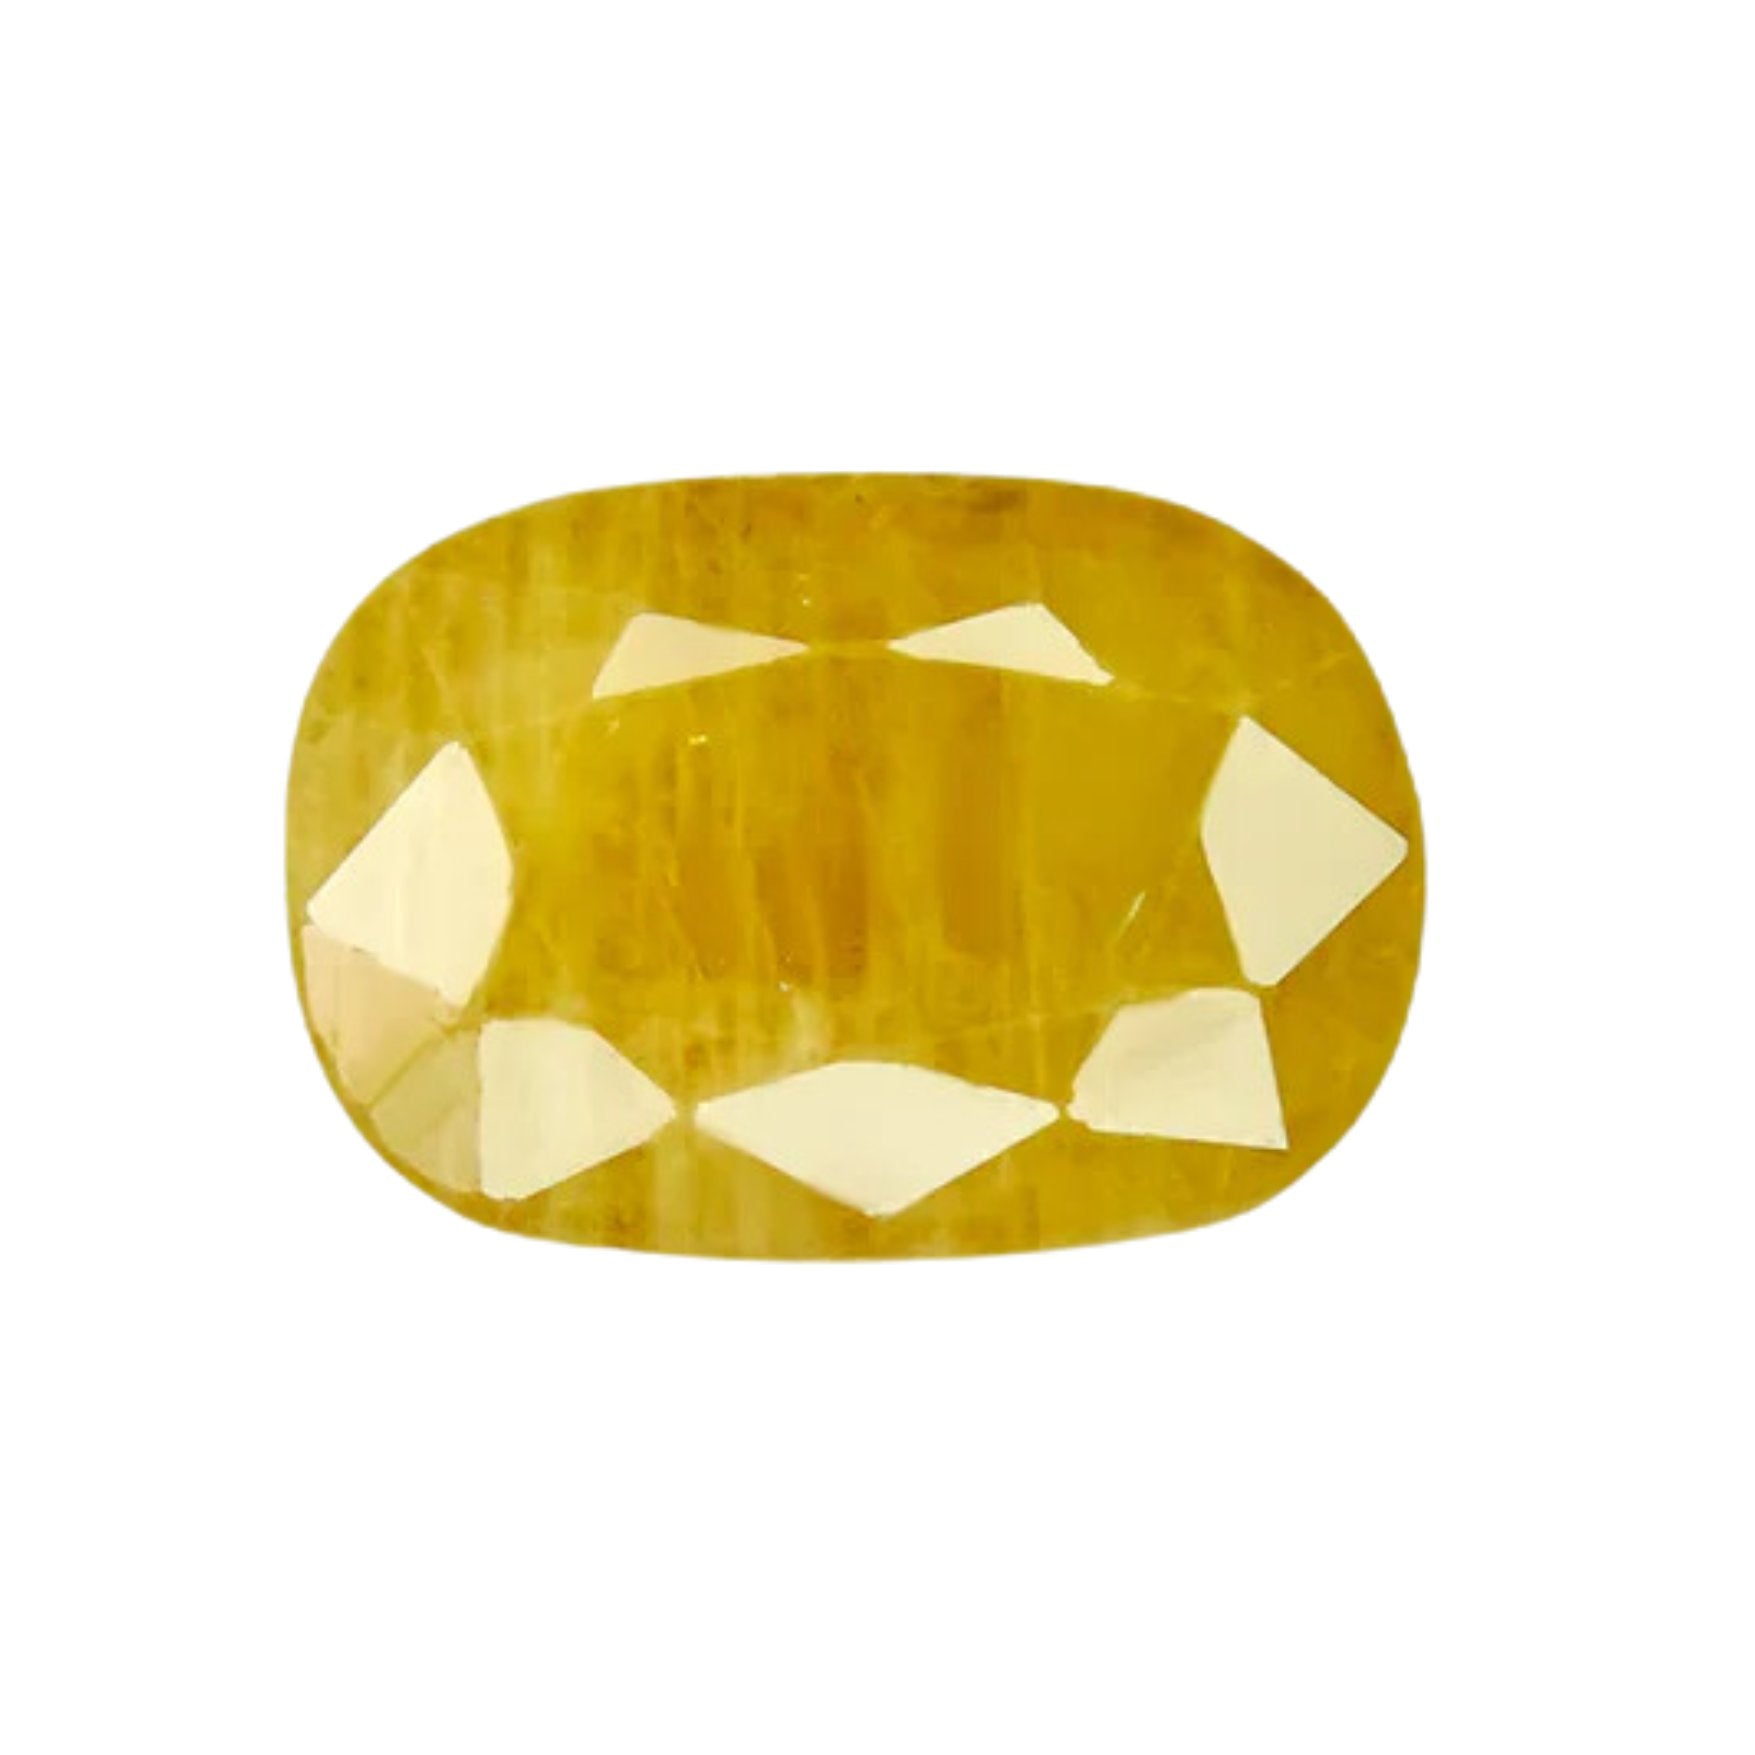 Phukraj/Yellow sapphire